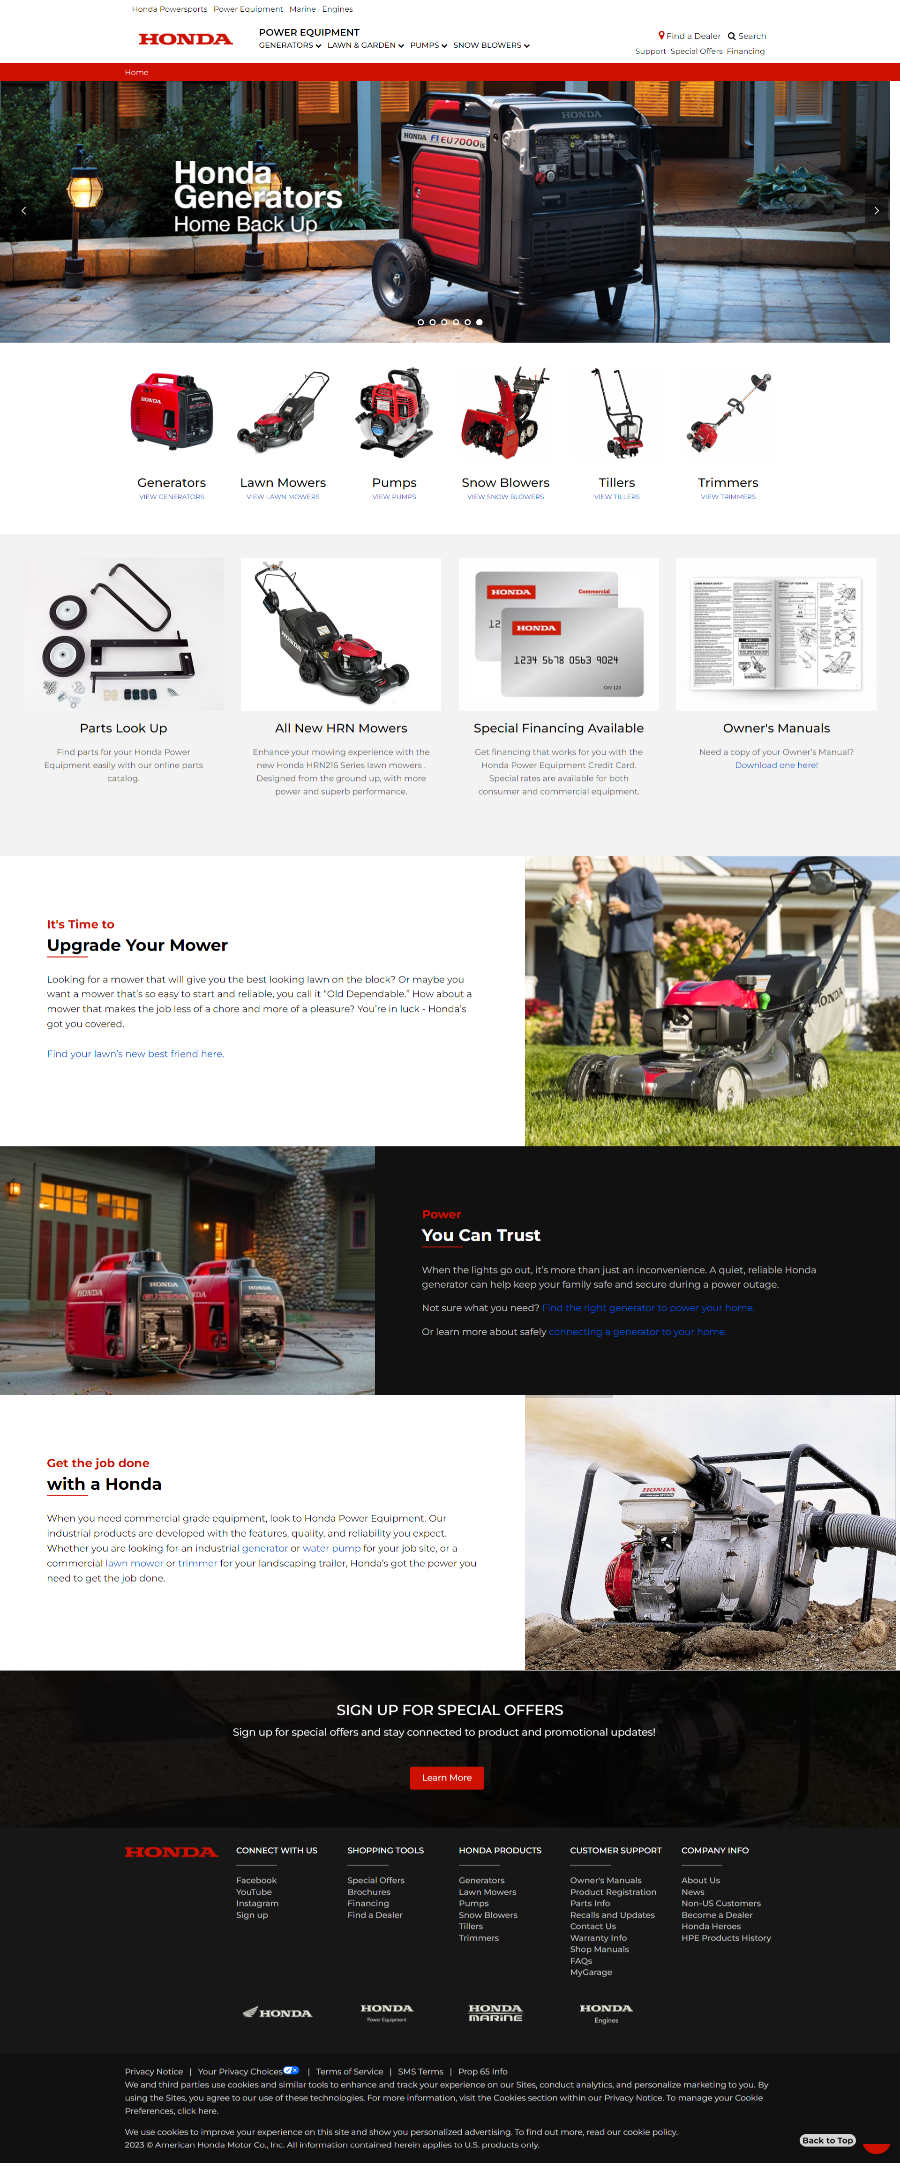 Honda-Power-Equipment-Generators-Lawn-Mowers-Snow-blowers-Tillers-Official-Site (2)